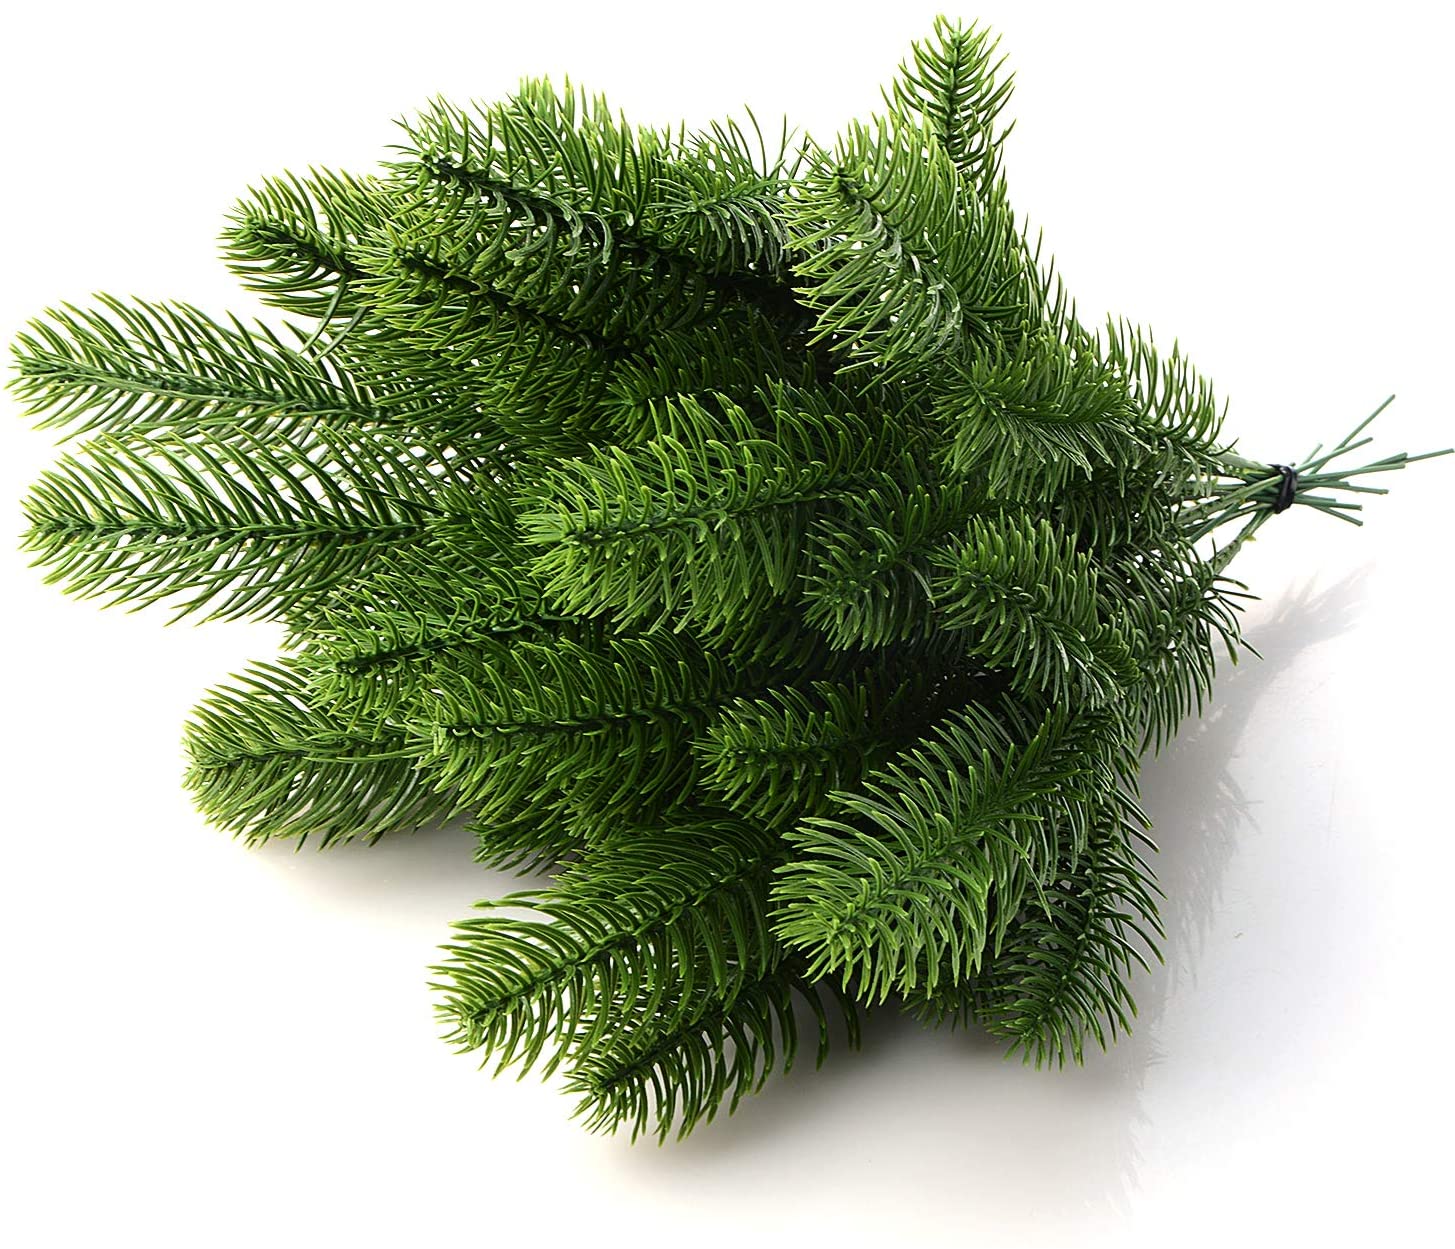 30Pcs Fake Green Pine Branches